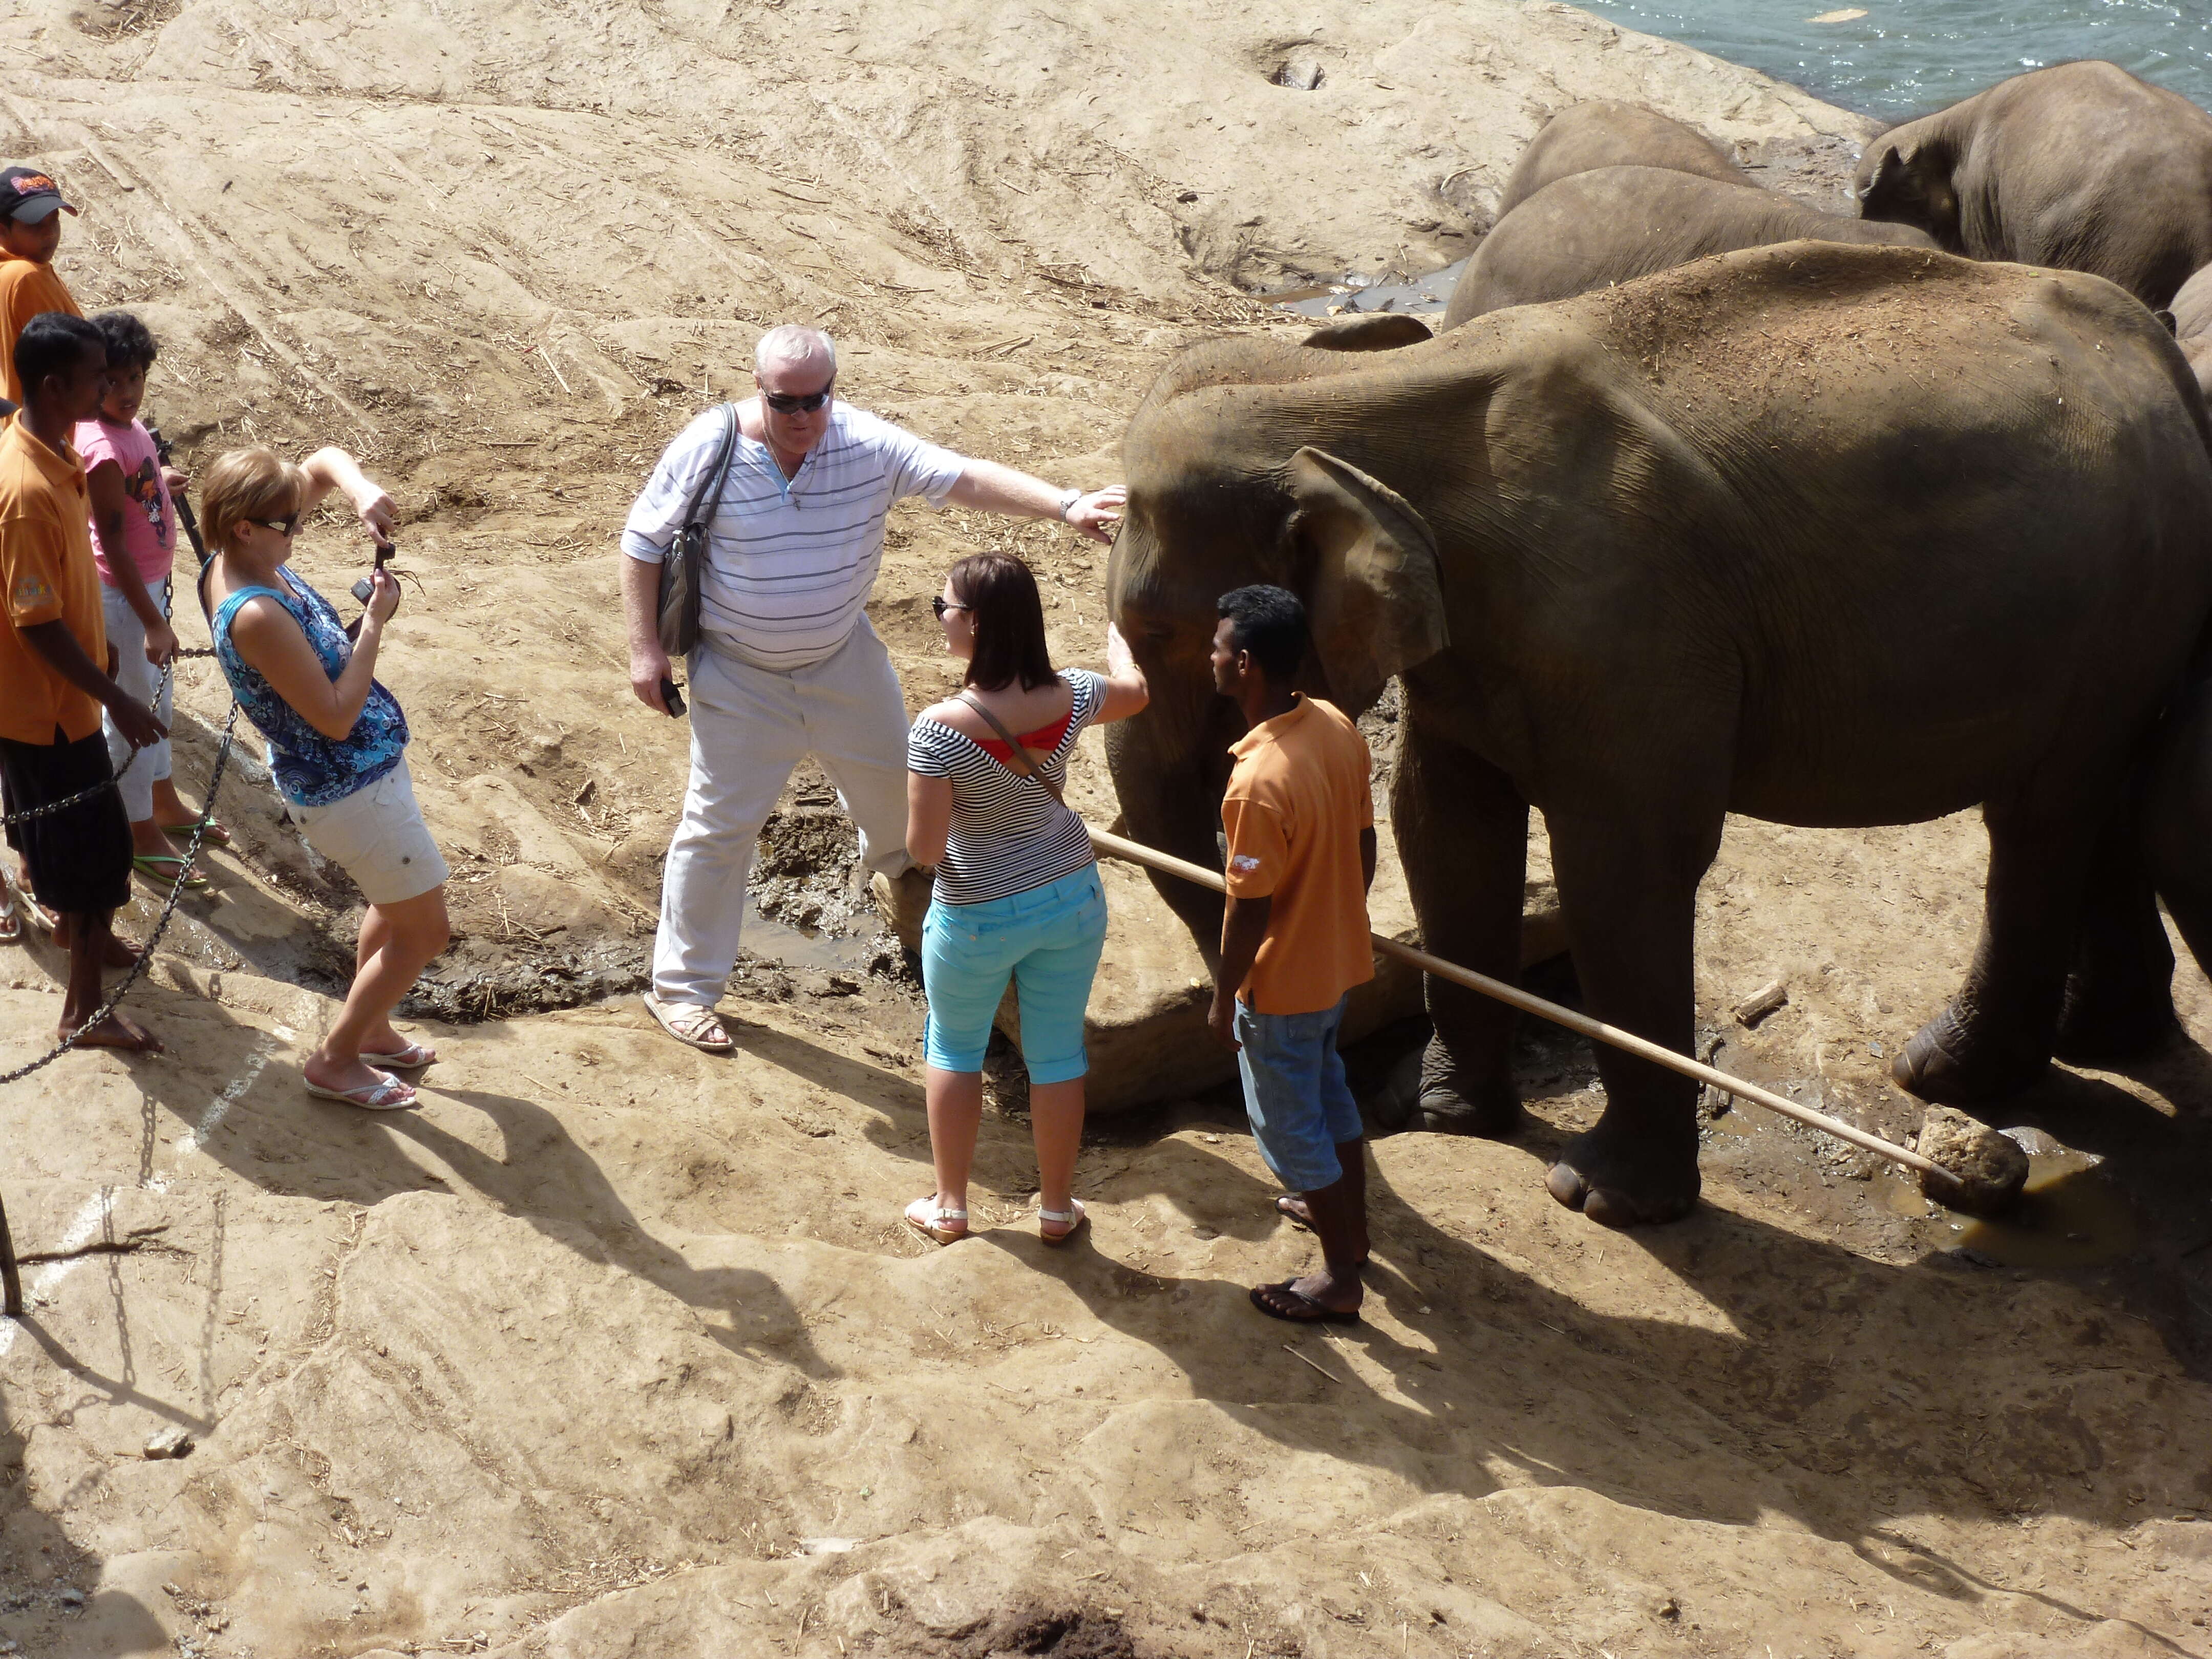 People posing for selfies with elephants